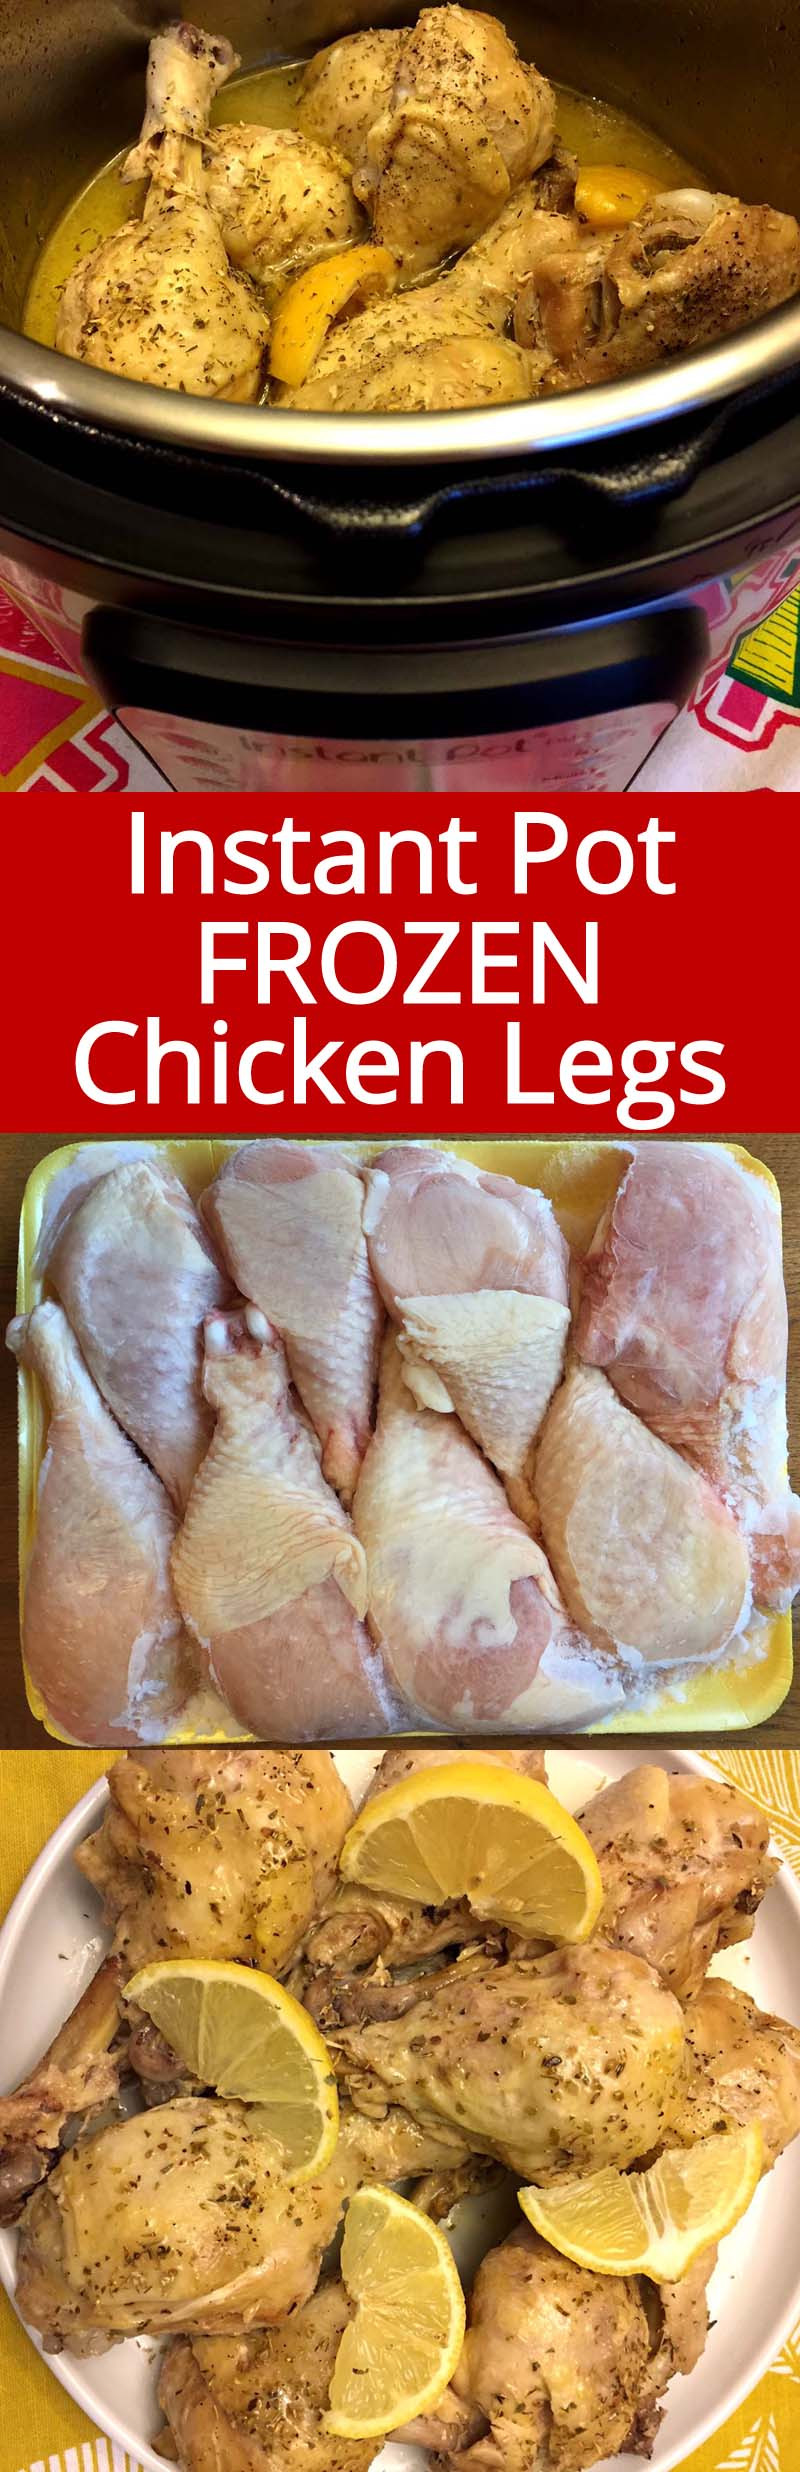 Frozen Chicken Legs Instant Pot
 Instant Pot Frozen Chicken Legs With Lemon And Garlic